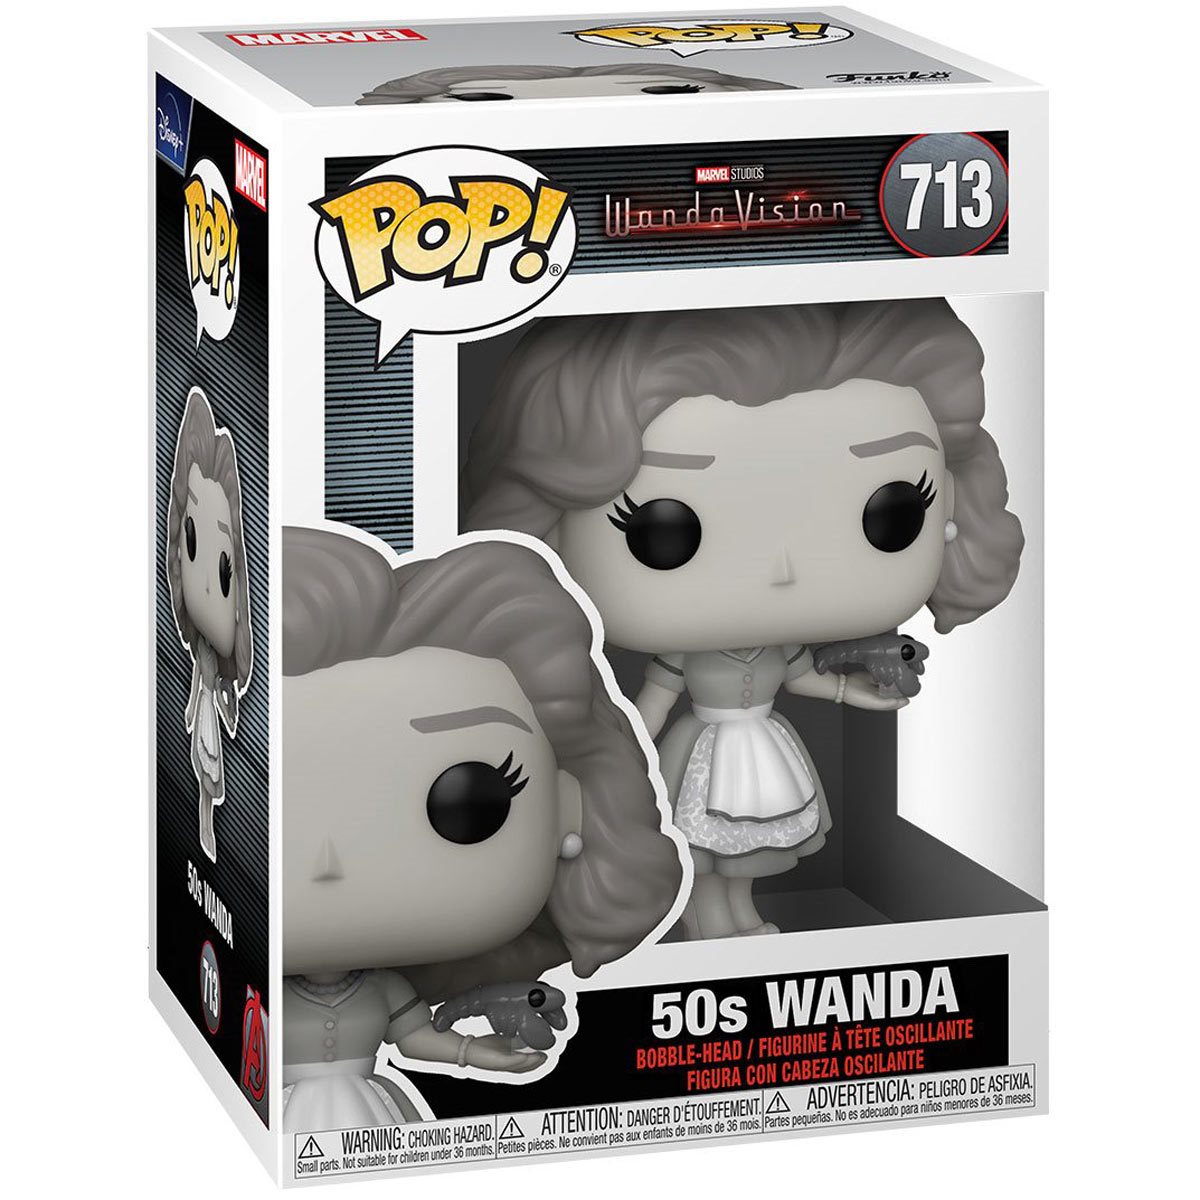 50's Wanda 713 - Funko Pop! WandaVision